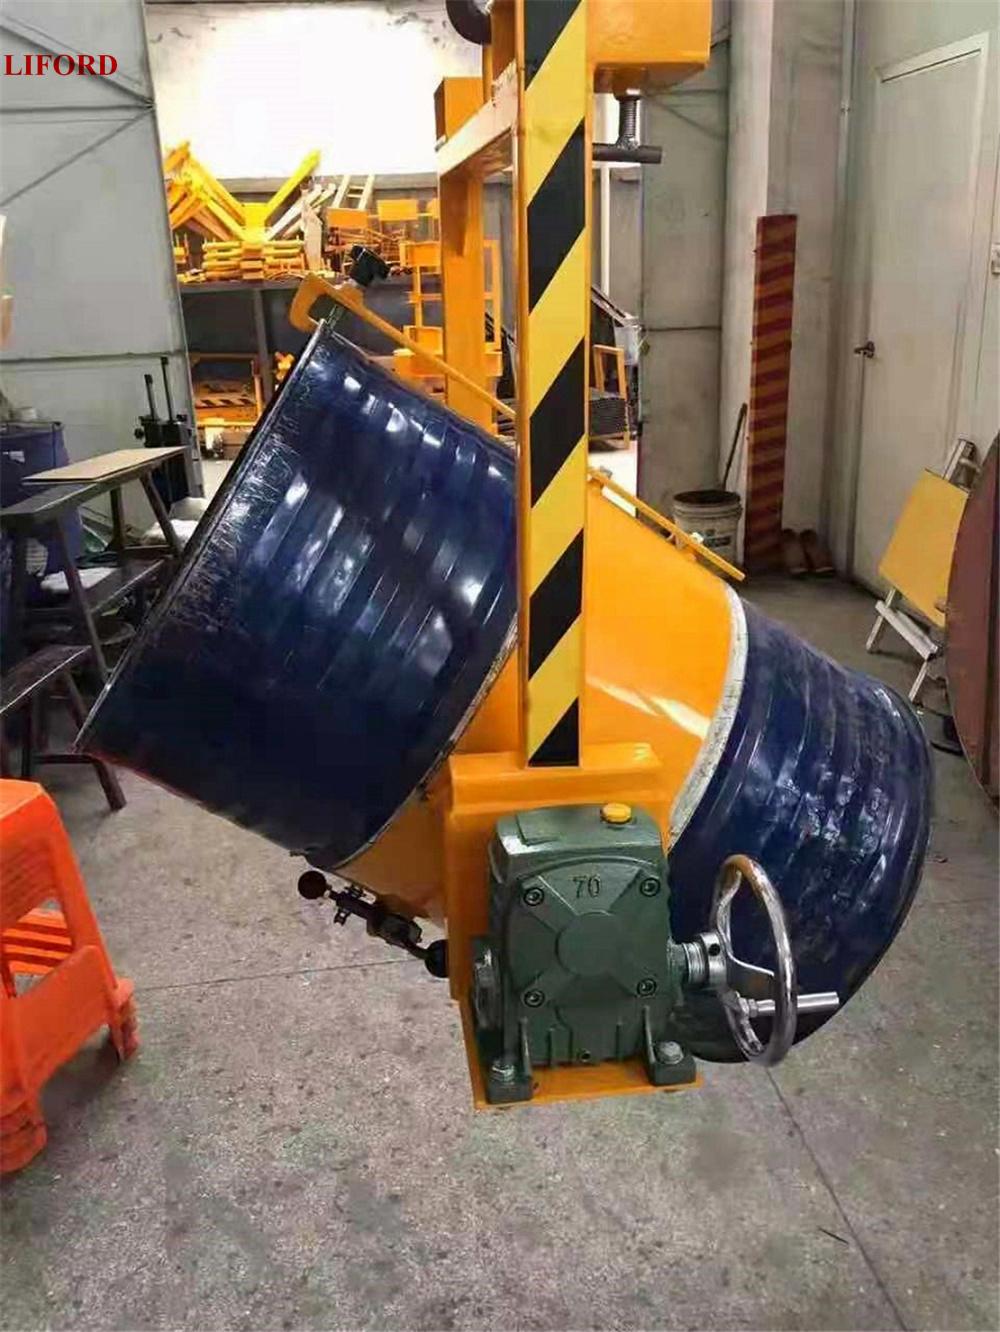 55 Gallon Drum Rotator Drum Lifter Forklift Attachment Lm800